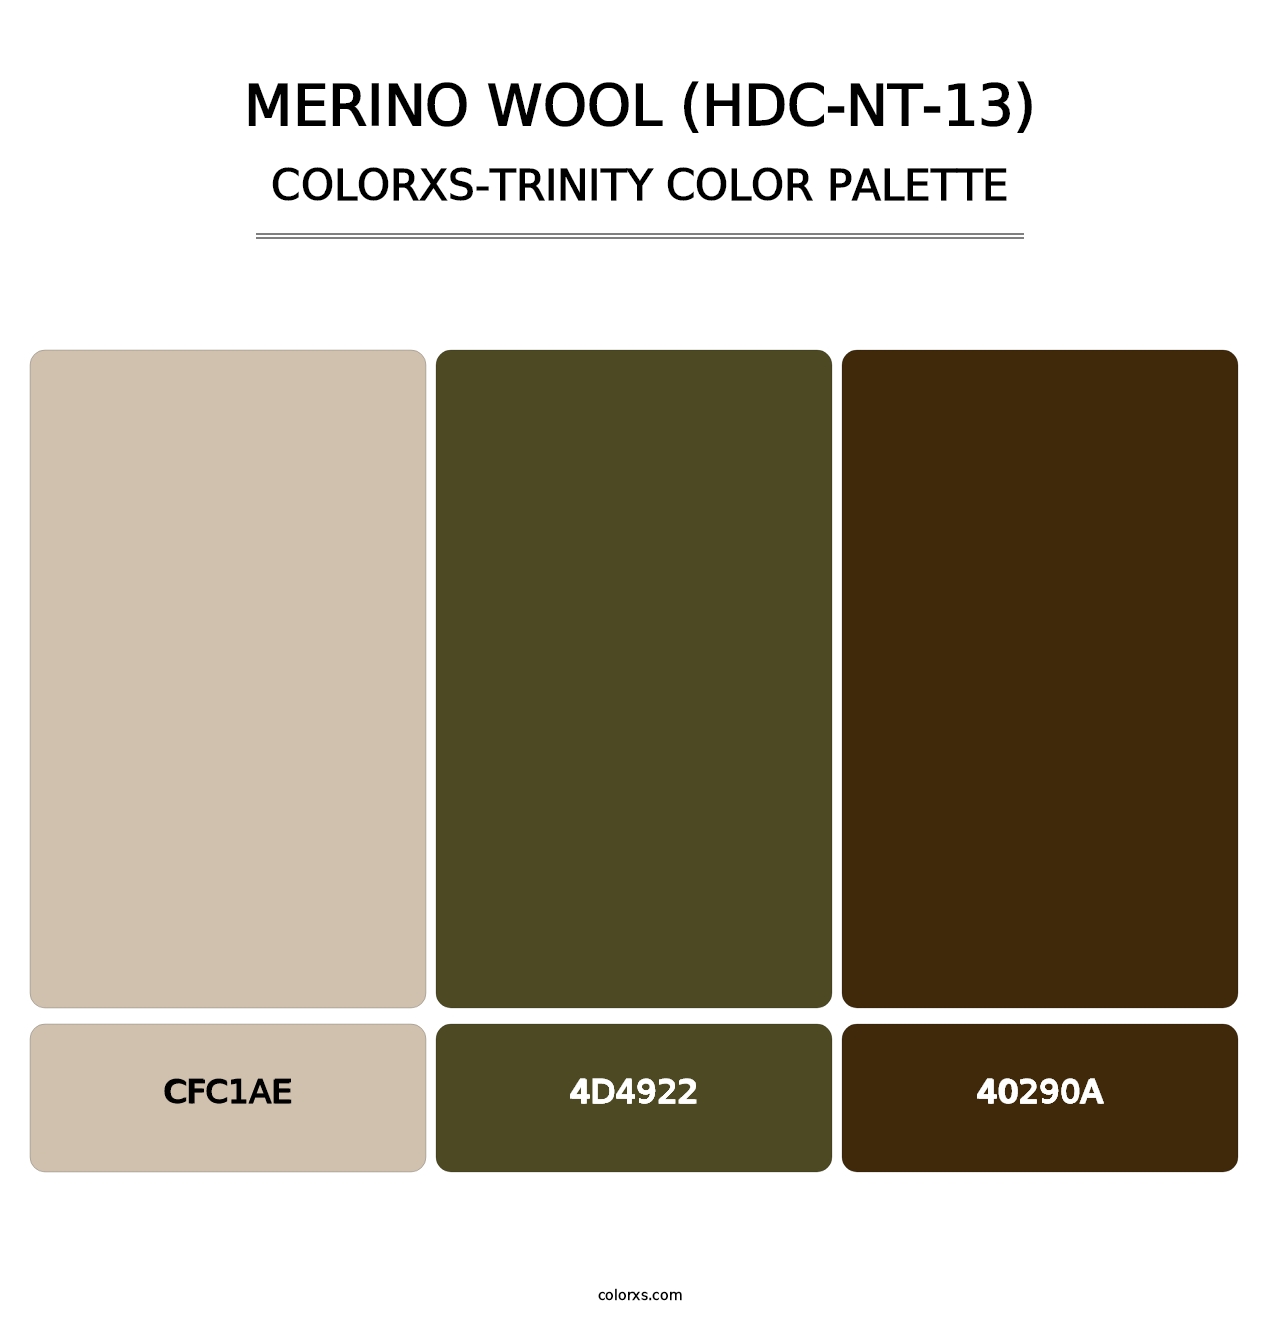 Merino Wool (HDC-NT-13) - Colorxs Trinity Palette